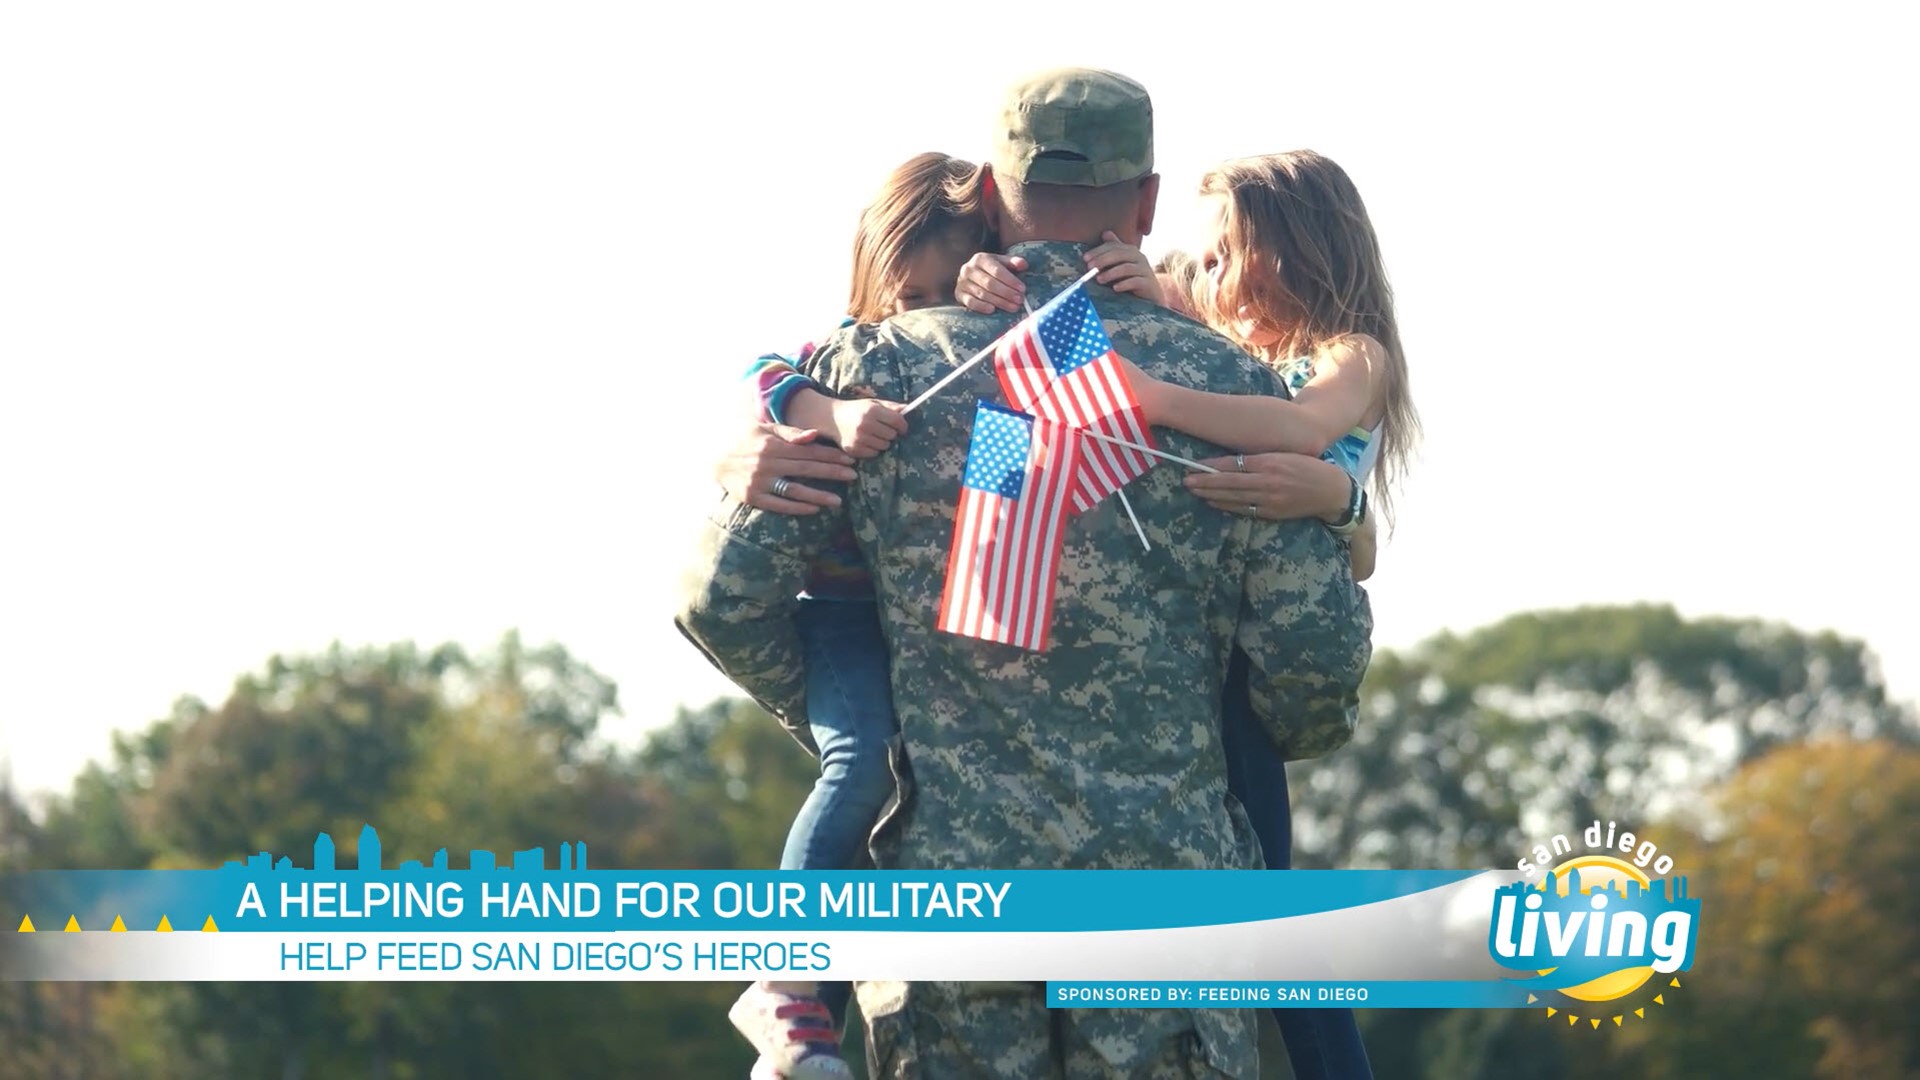 Help feed San Diego's heroes. Sponsored by Feeding San Diego